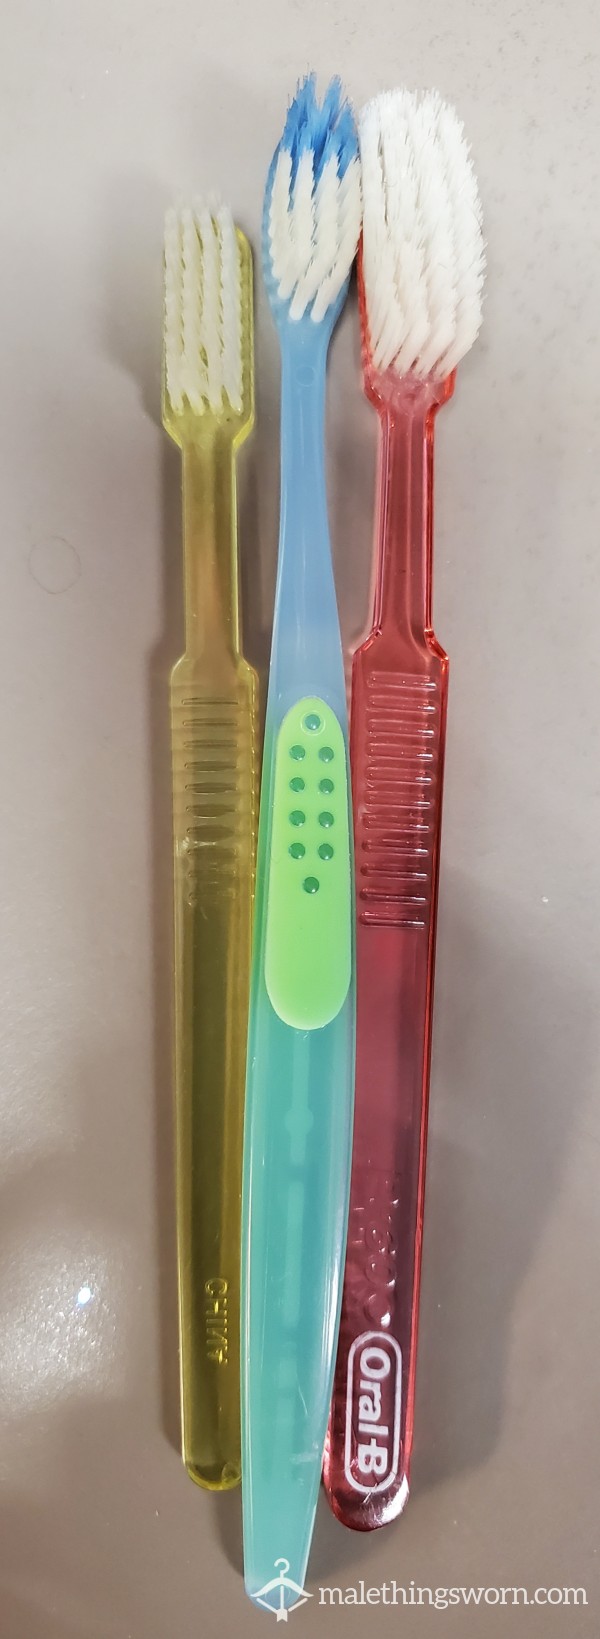 Customized Toothbrush